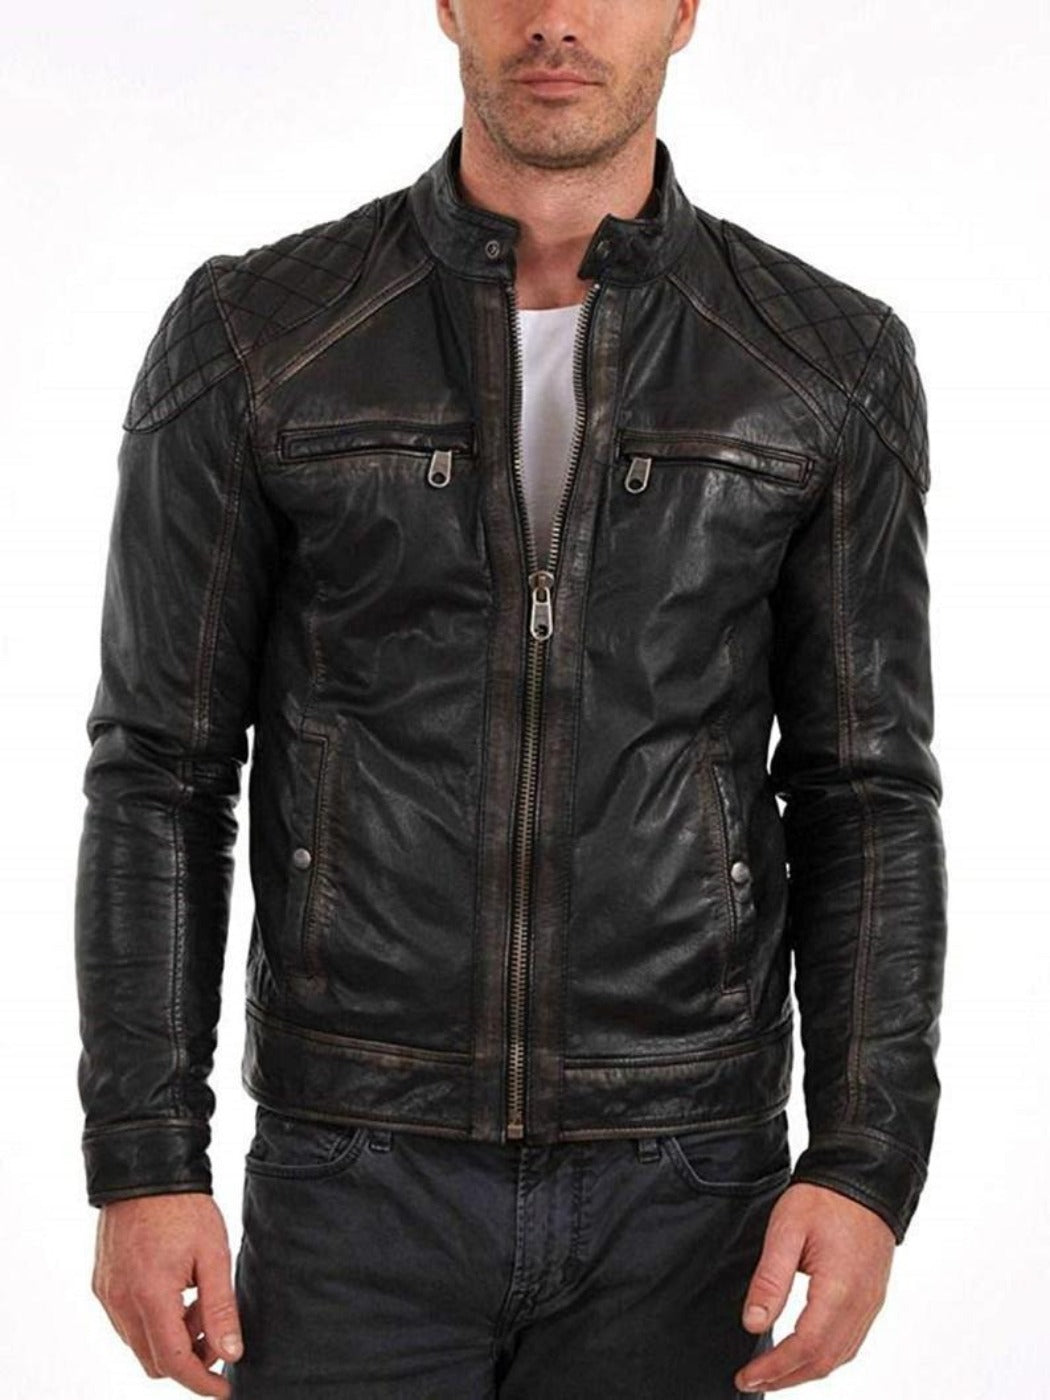 Noora Men’s leather jacket black leather biker jacket, premium quality Customized Handcrafted Biker Racer Retro style SJ301